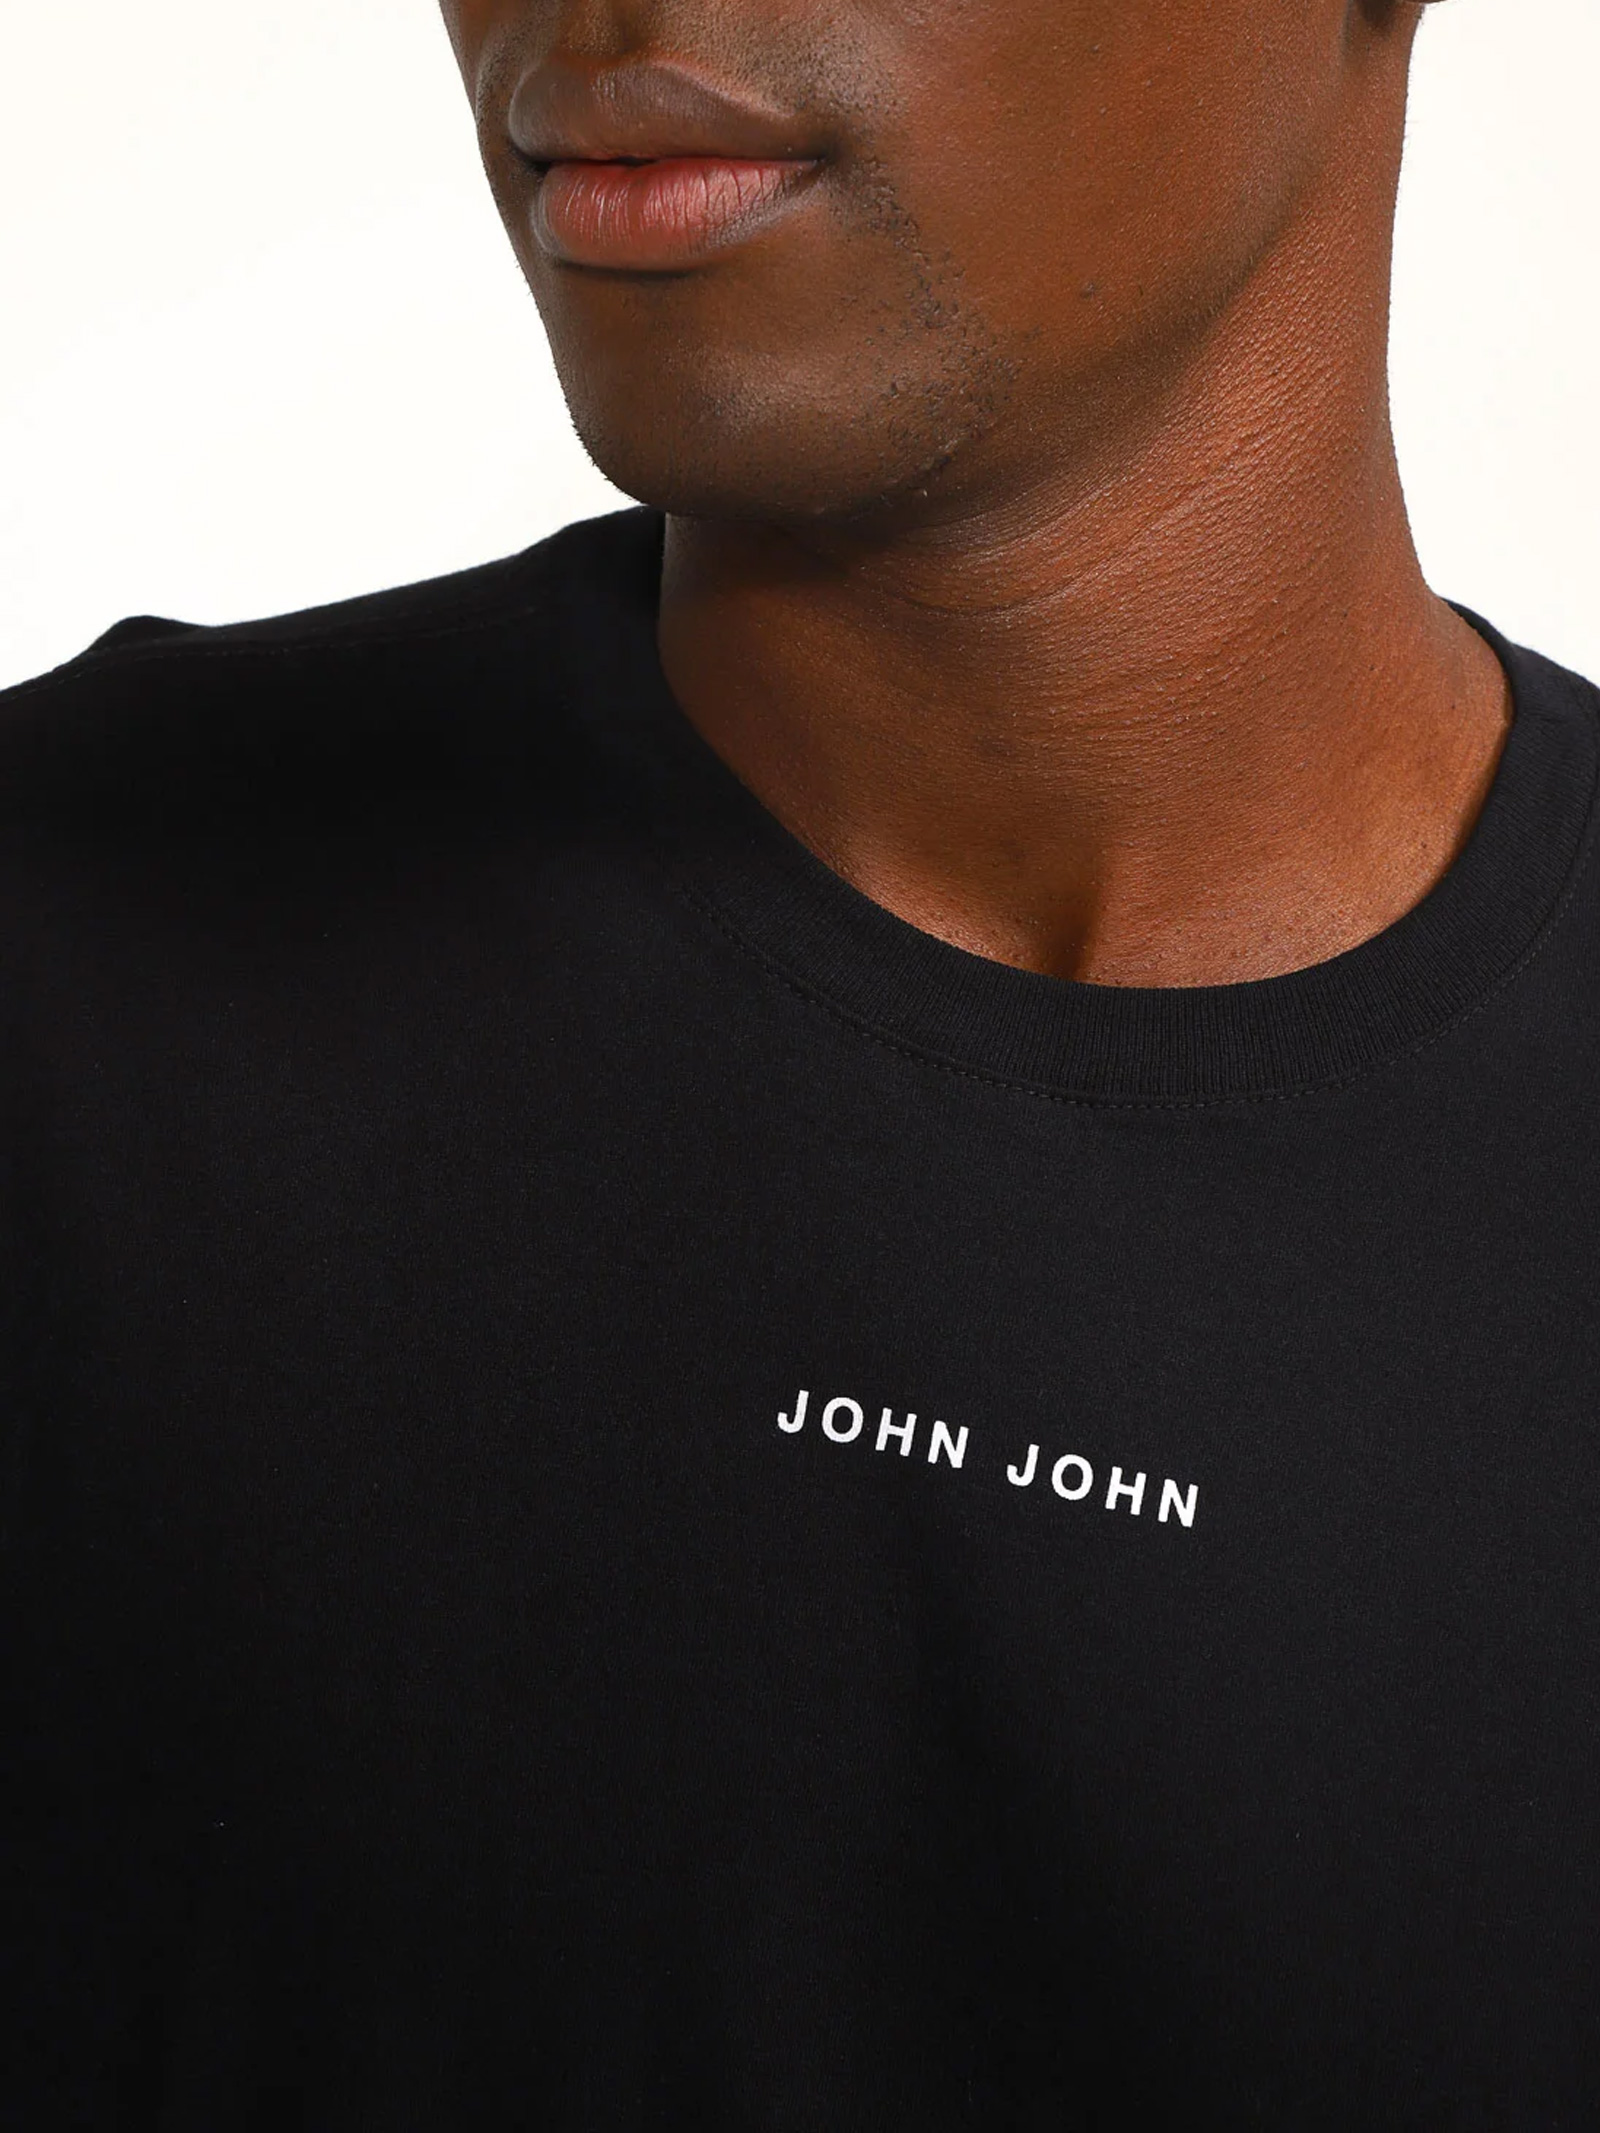 Camiseta John John Estampada Manga Curta Feminina - Preto